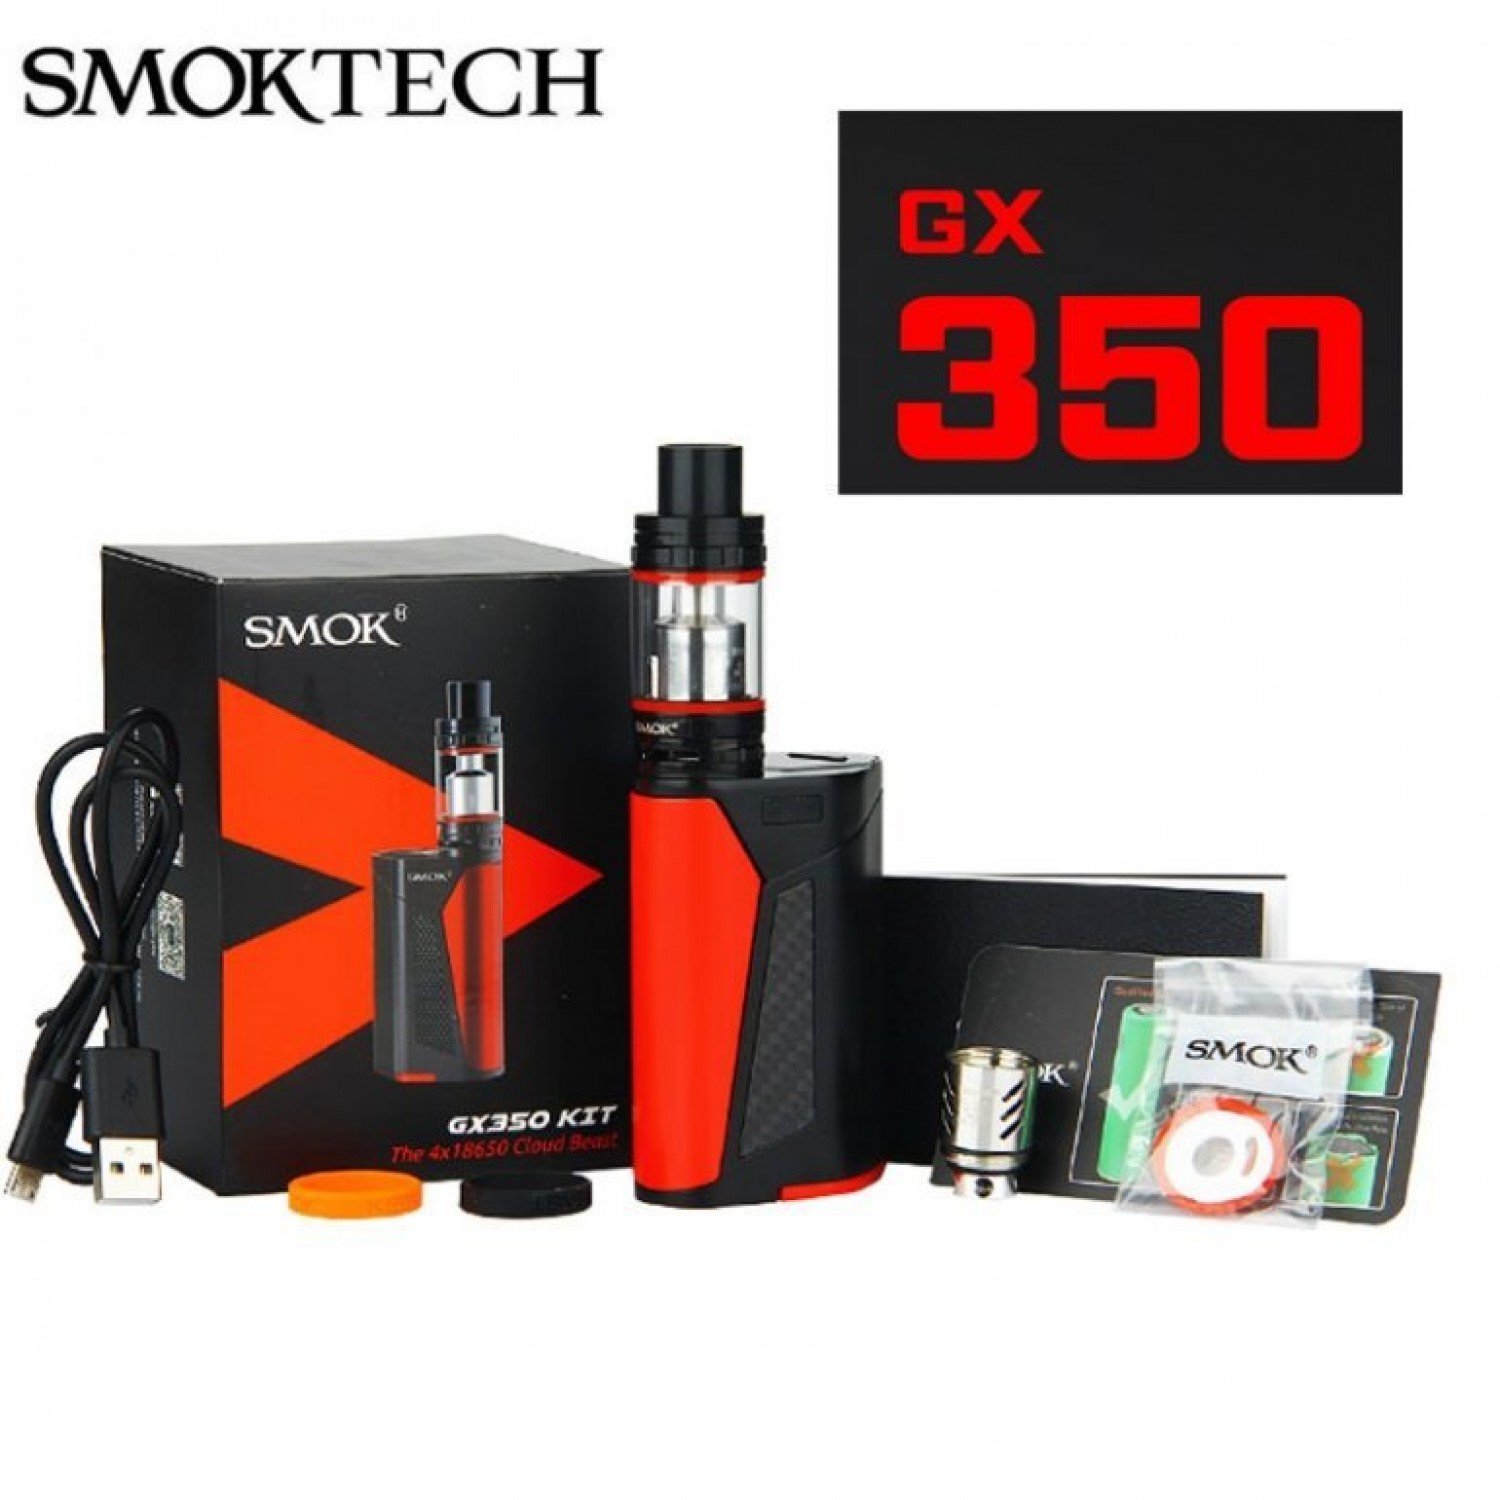 Smok - GX350 TFV8 Cloud Beast Elektronik Sigara Kit 350 Watt